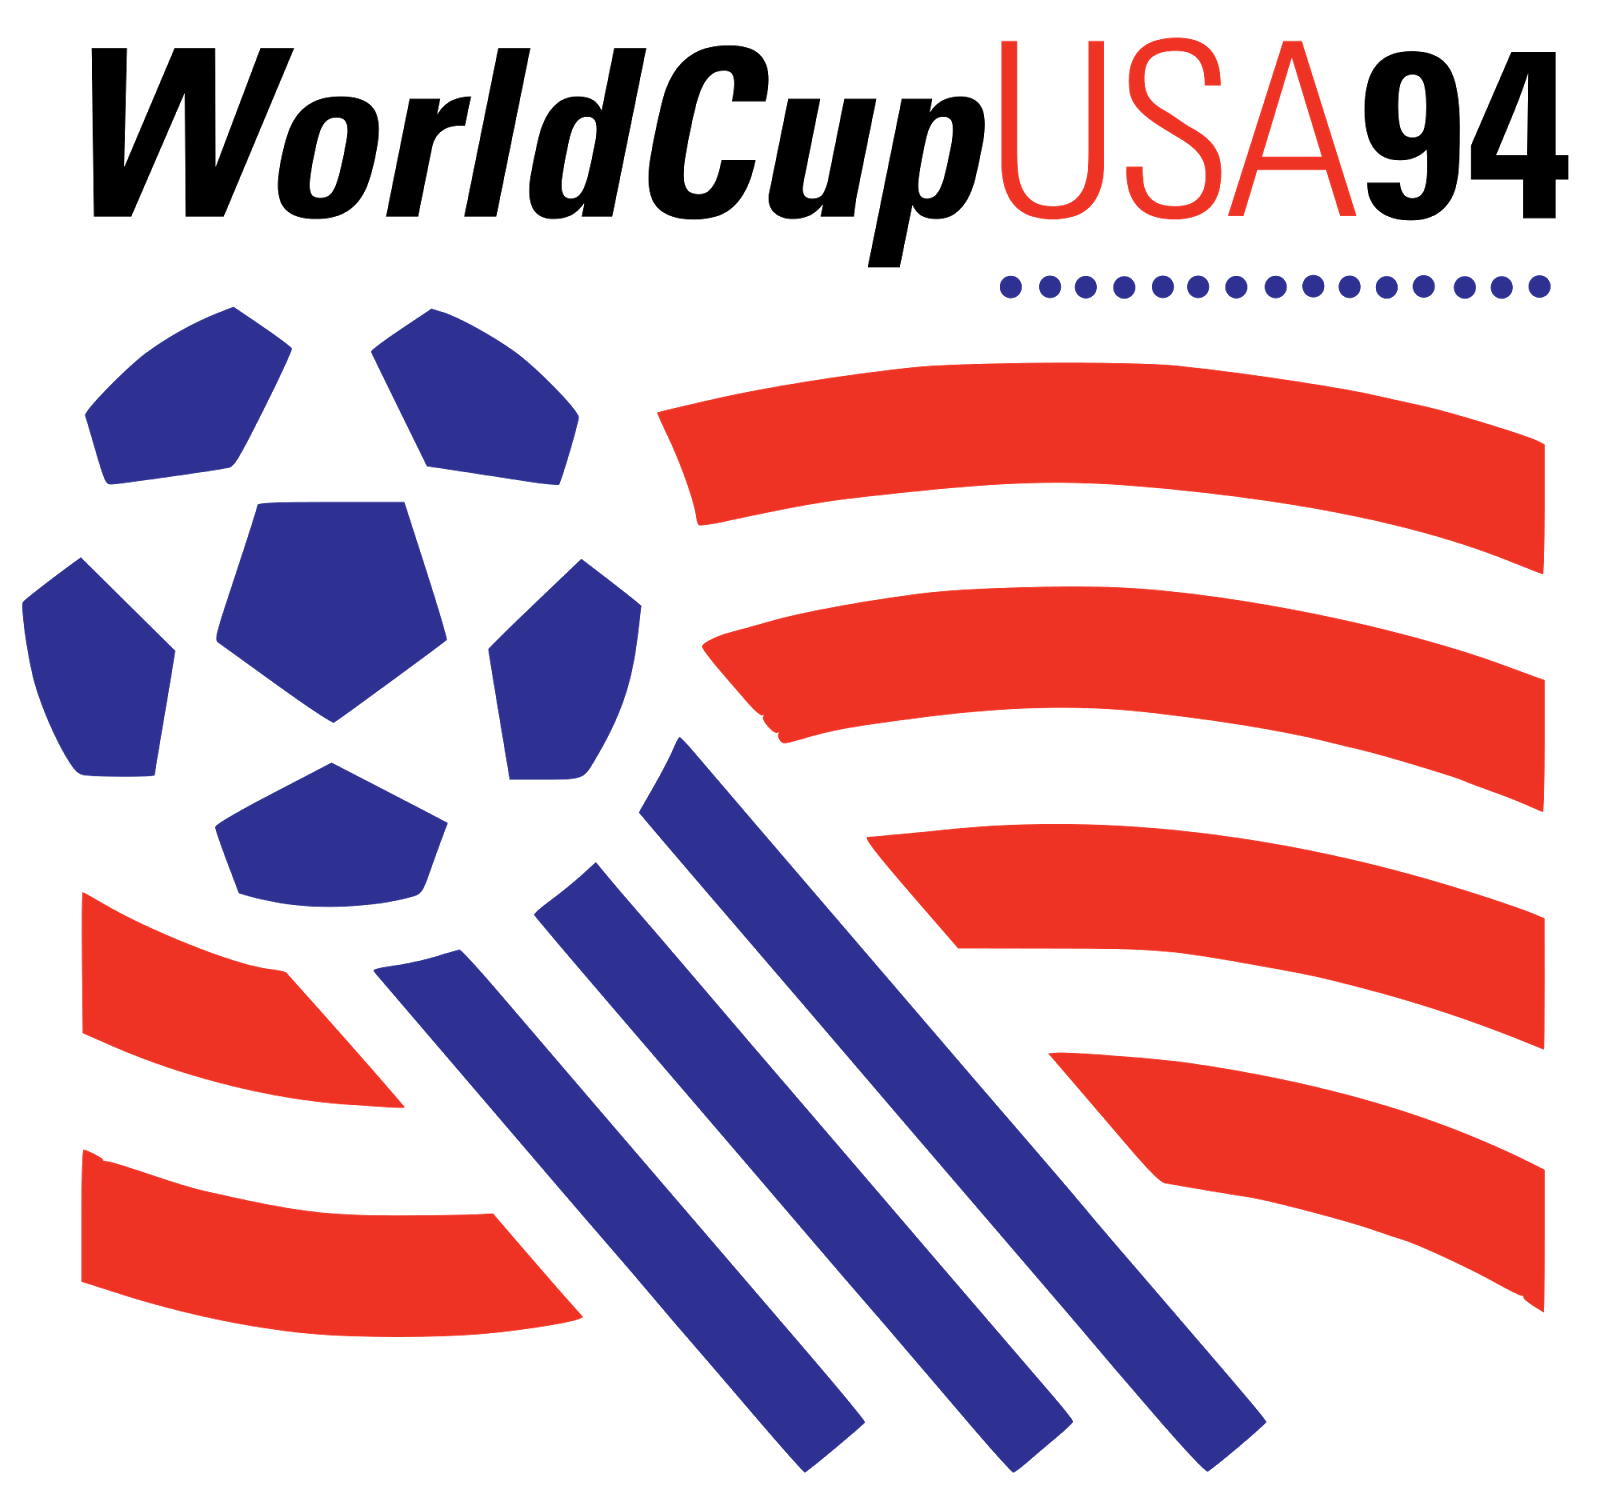 чемпионат мира по футболу, логотип, бренд, фирменный стиль, FIFA World Cup, logo, brand, США 1994